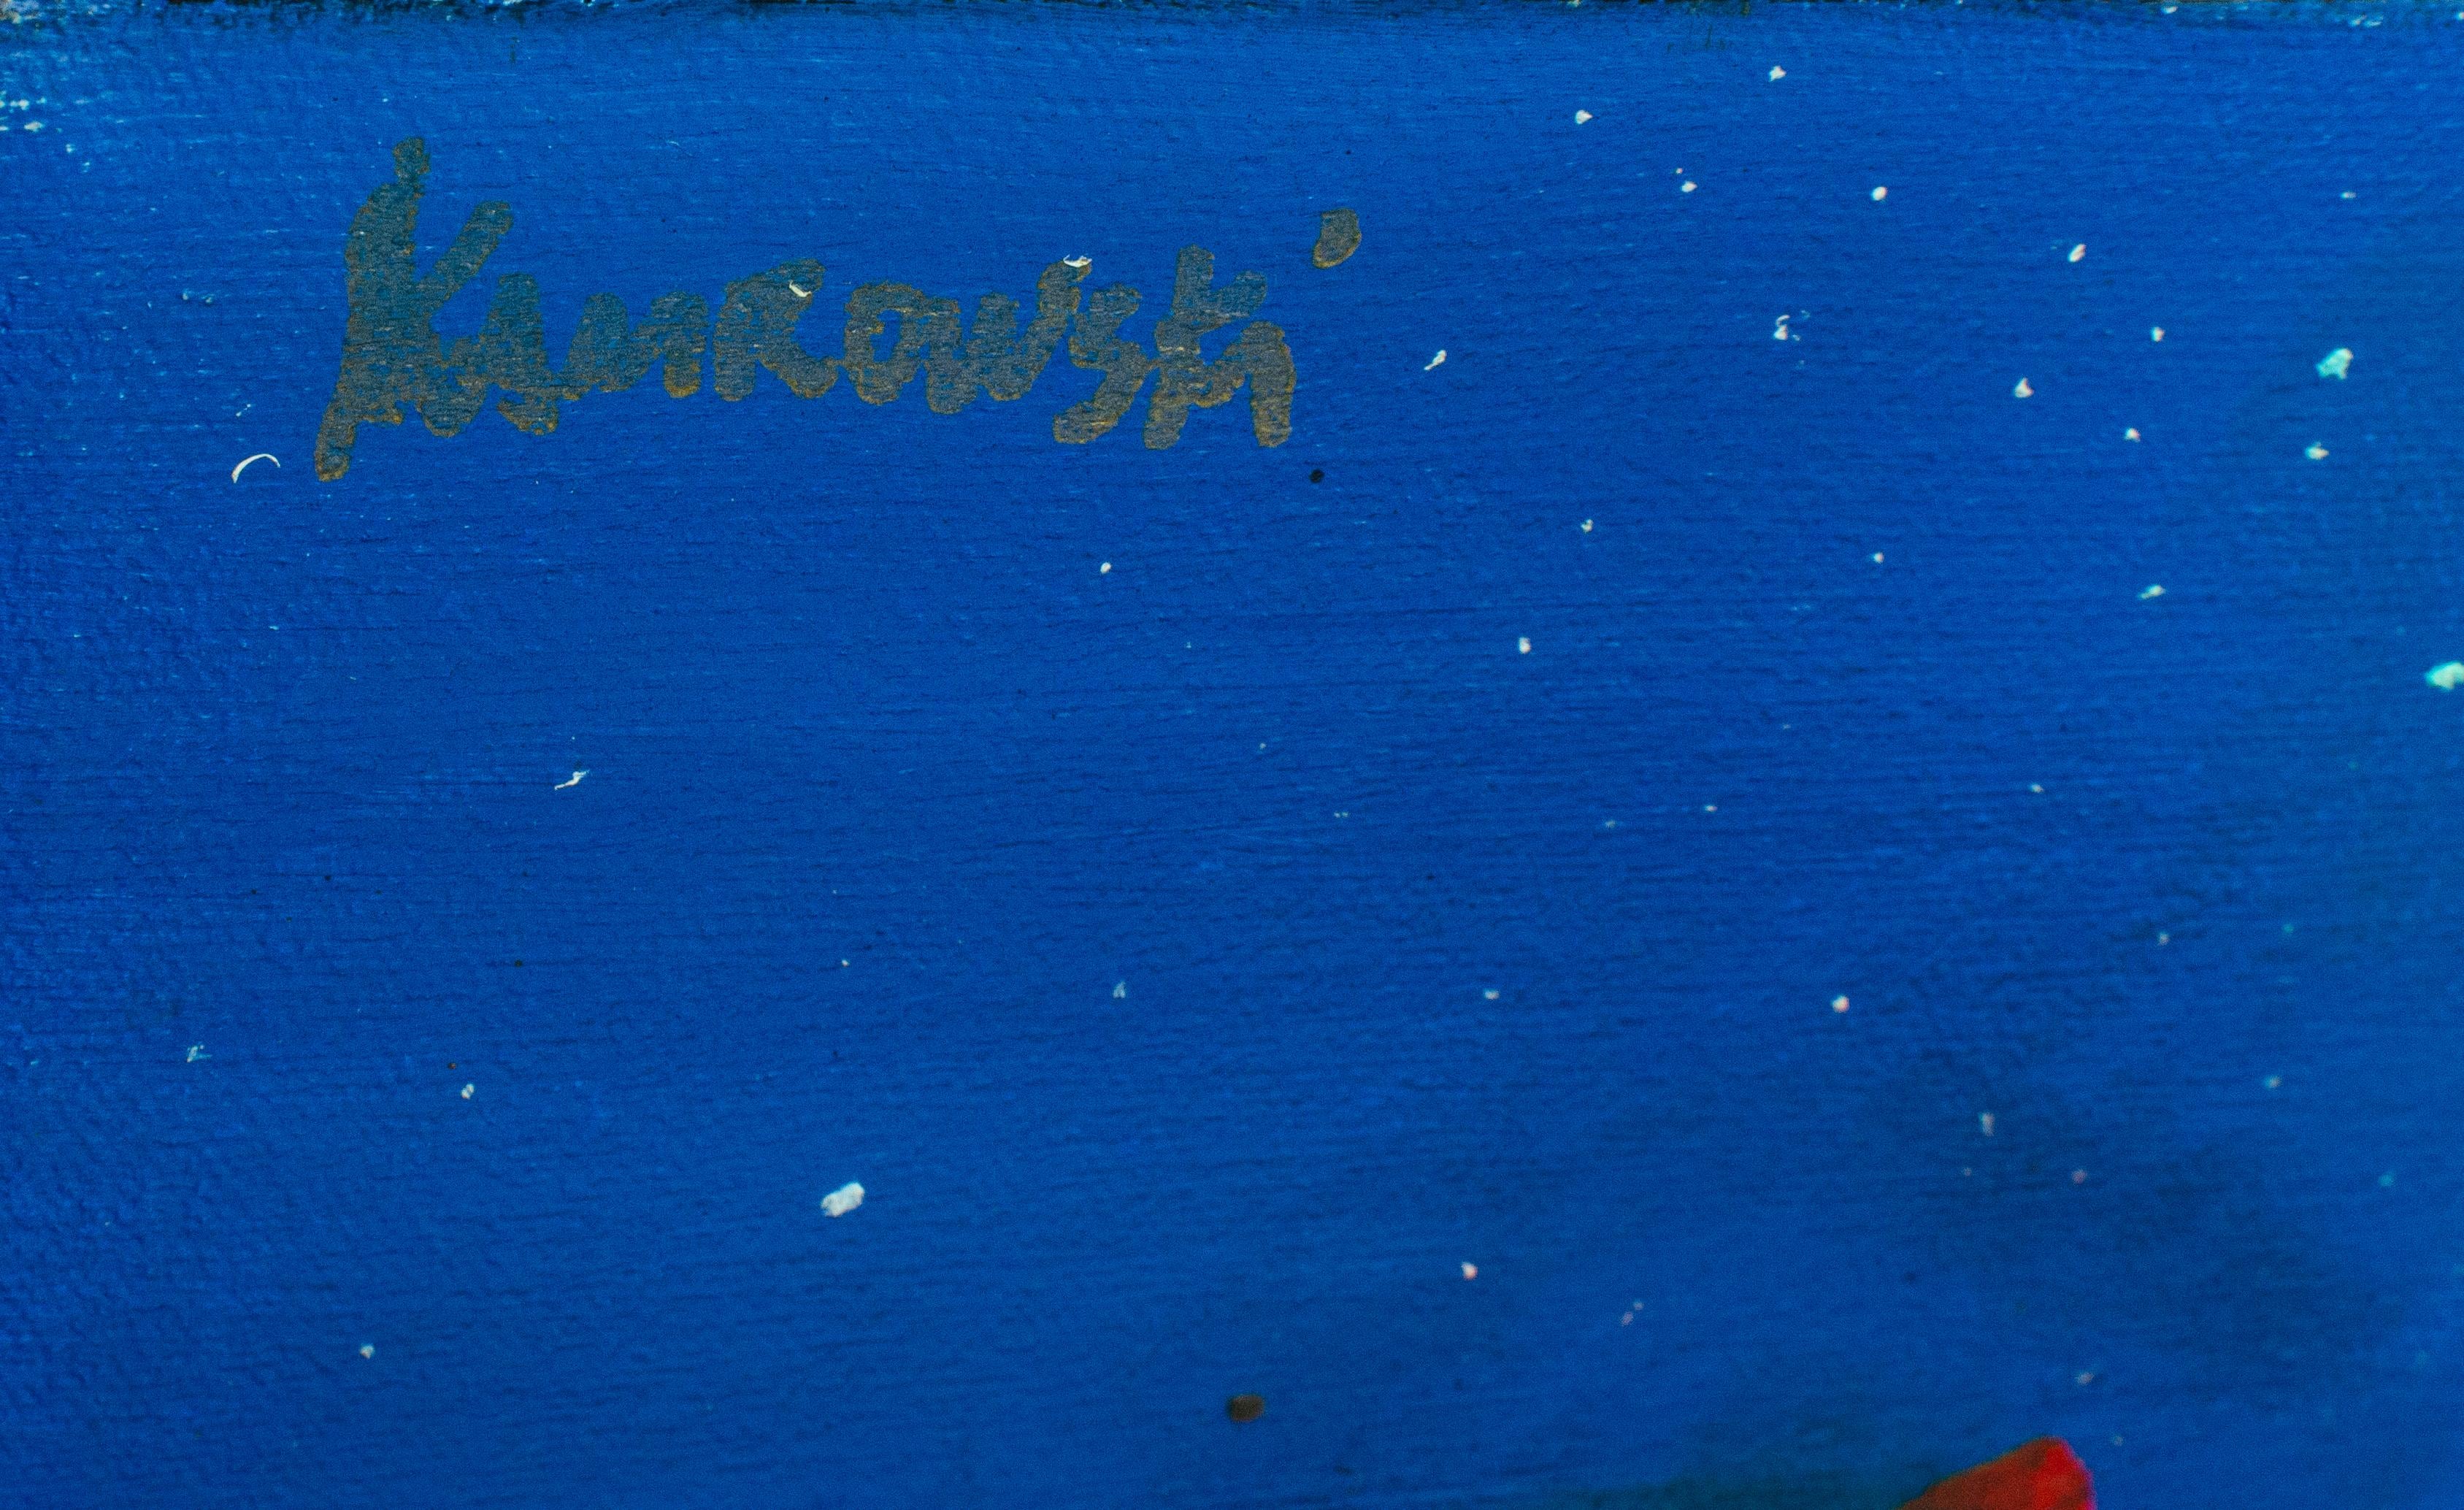 Gerome Kamrowski
Midsummer Night, 1973
Signed upper left
Acrylic on canvas
16 x 20 inches

Gerome Kamrowski was born in Warren, Minnesota, on January 19, 1914. In 1932 he enrolled in the Saint Paul School of Art (now Minnesota Museum of American Art